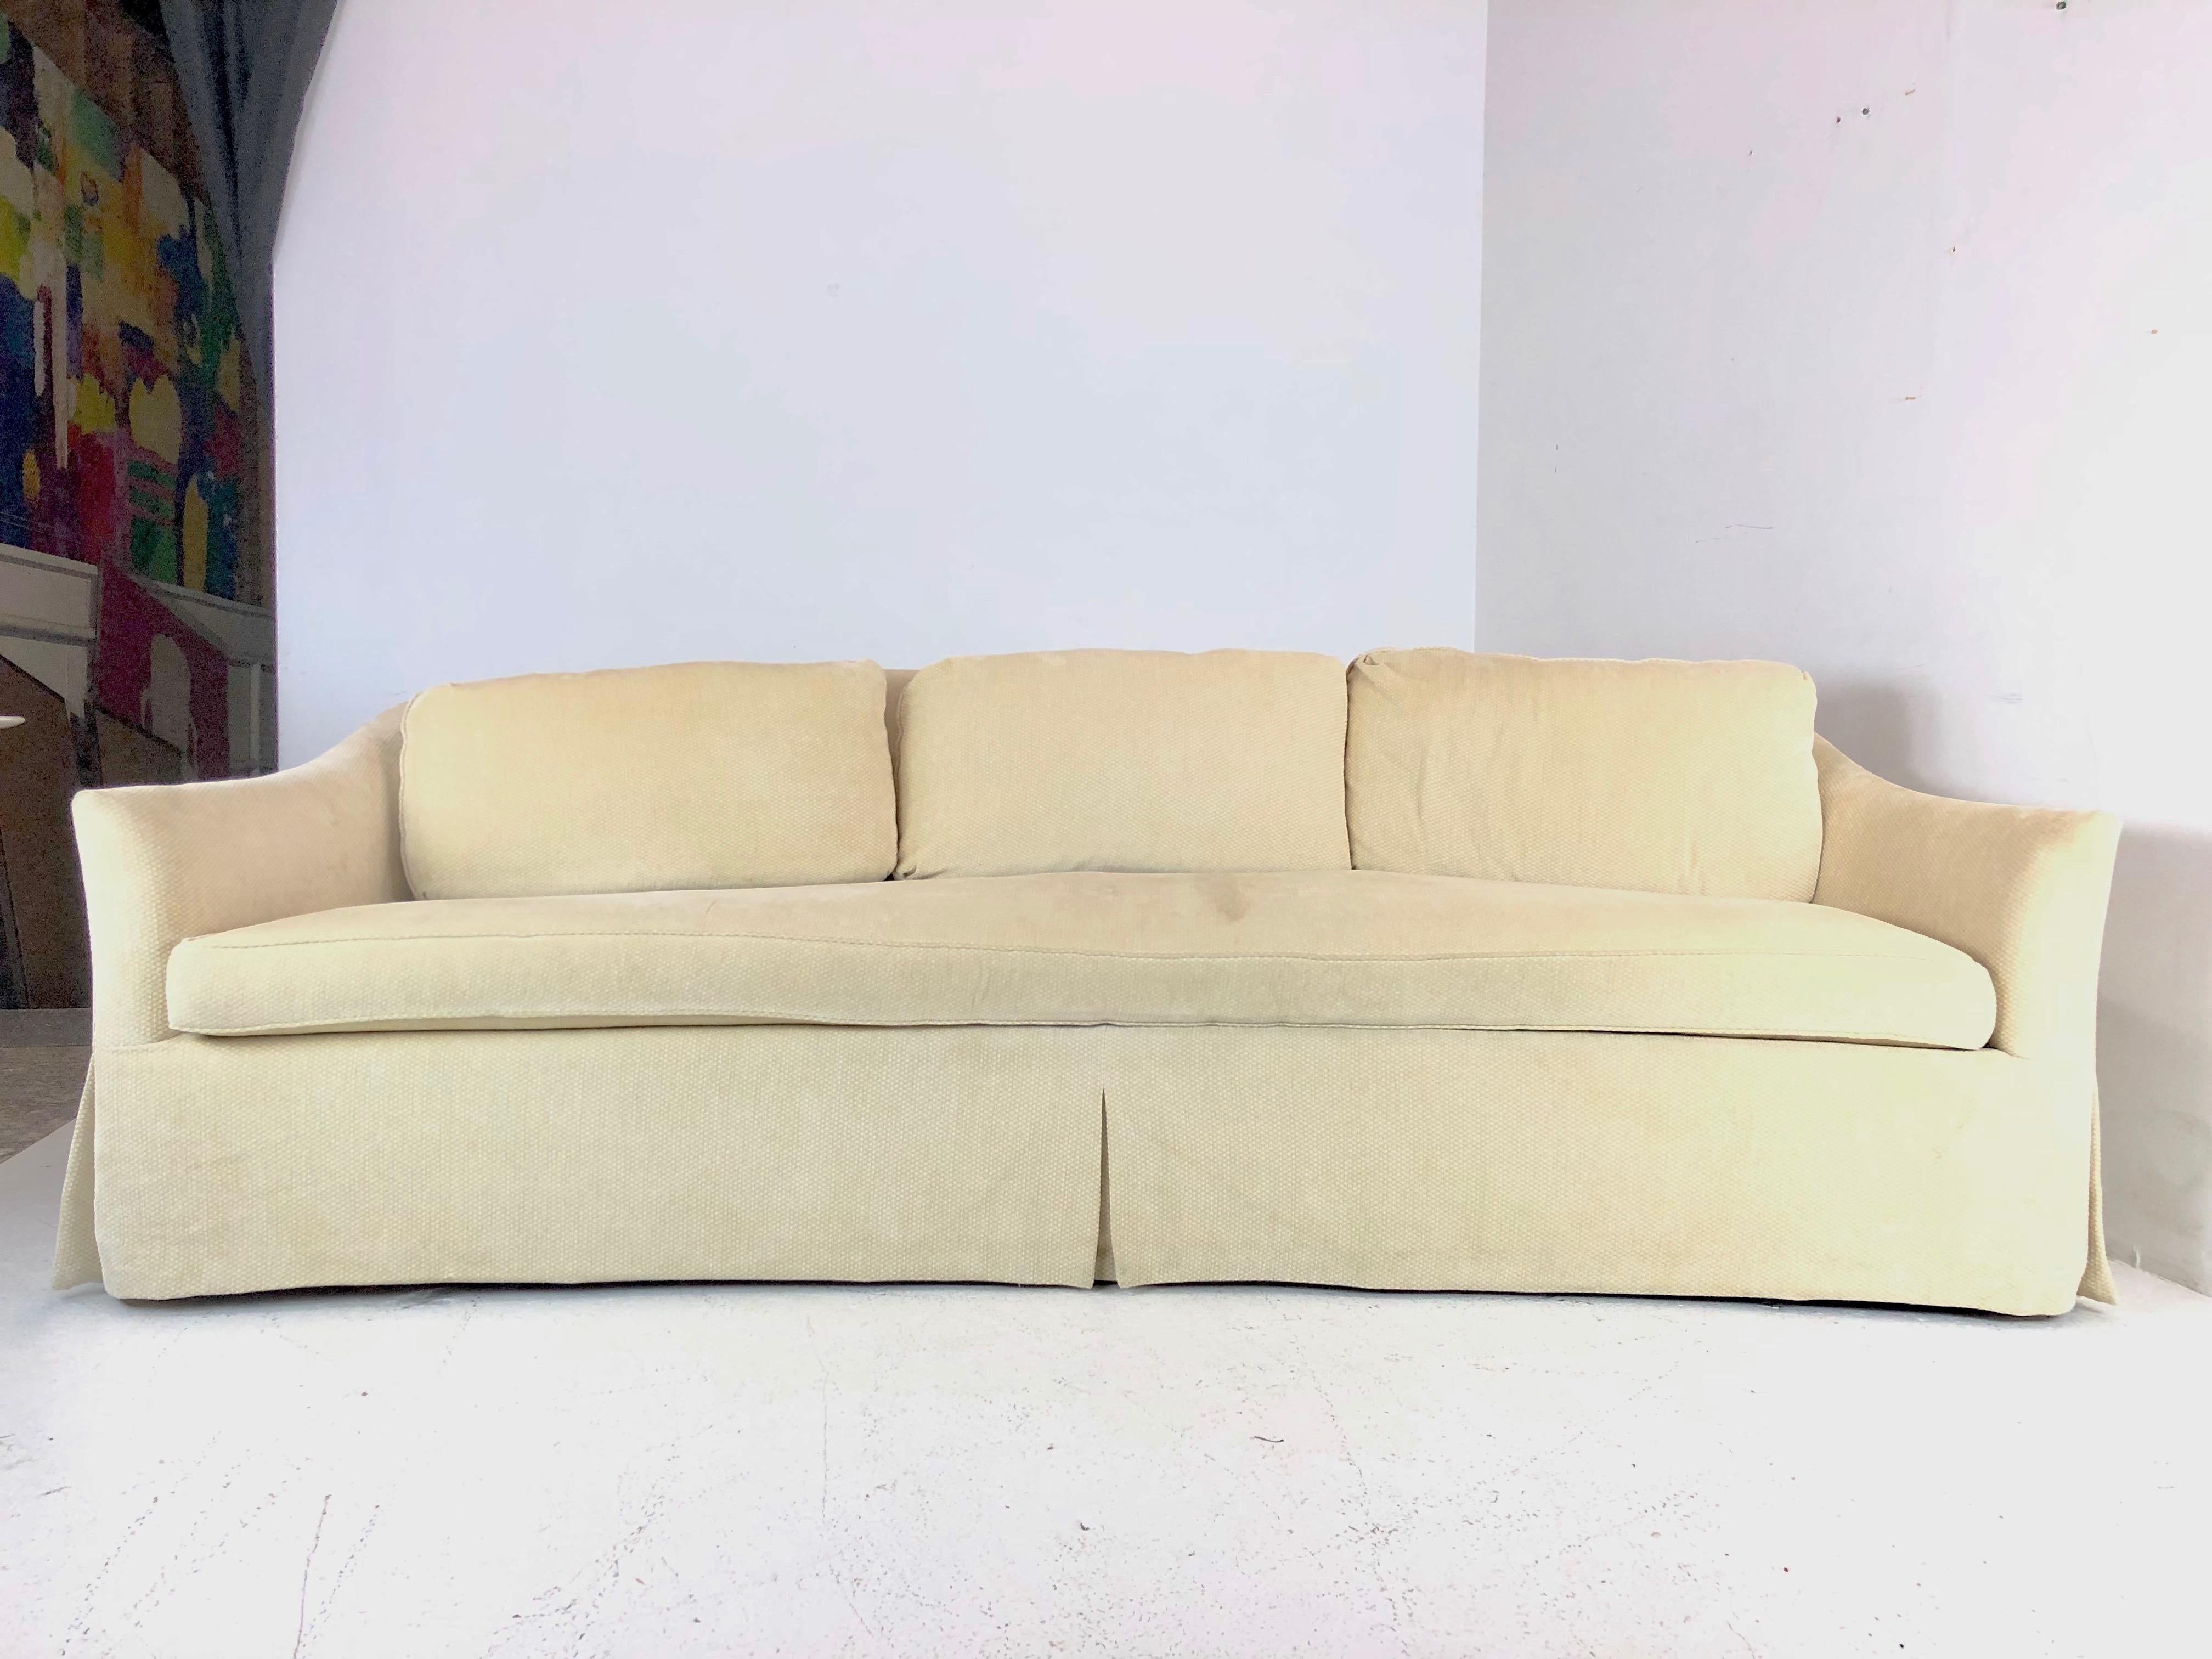 a.rudin sofa price